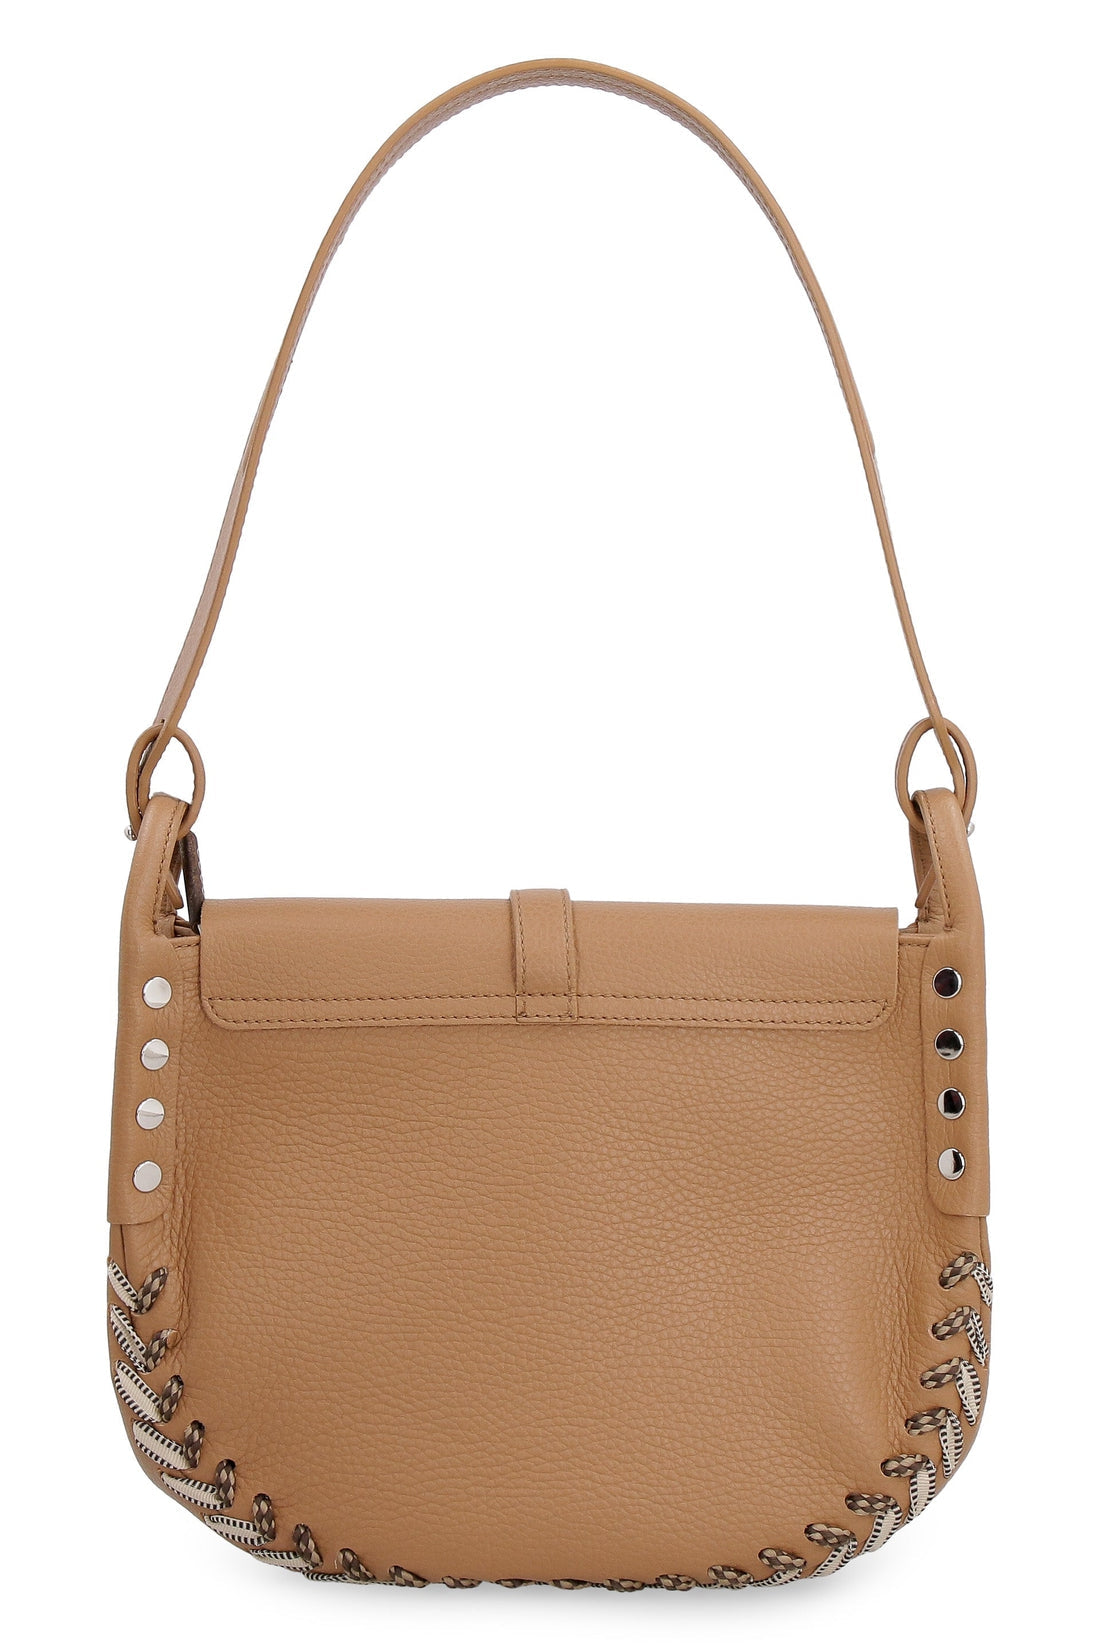 Zanellato-OUTLET-SALE-Amina S leather shoulder bag-ARCHIVIST